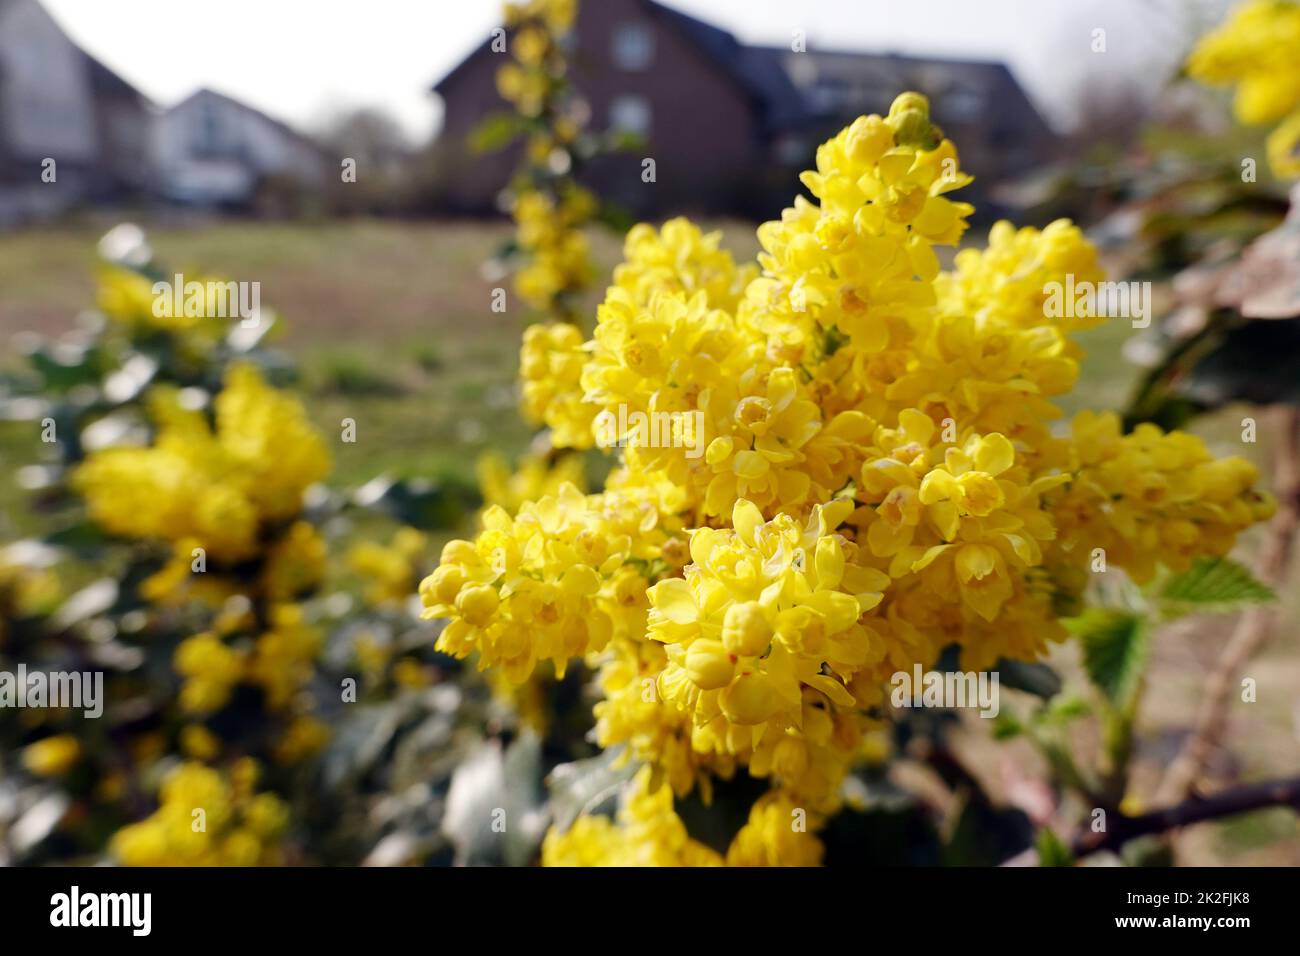 GewÃ¶hnliche mahonie (Mahonia aquifolium) - gelb blÃ¼hende Pflanze Foto de stock